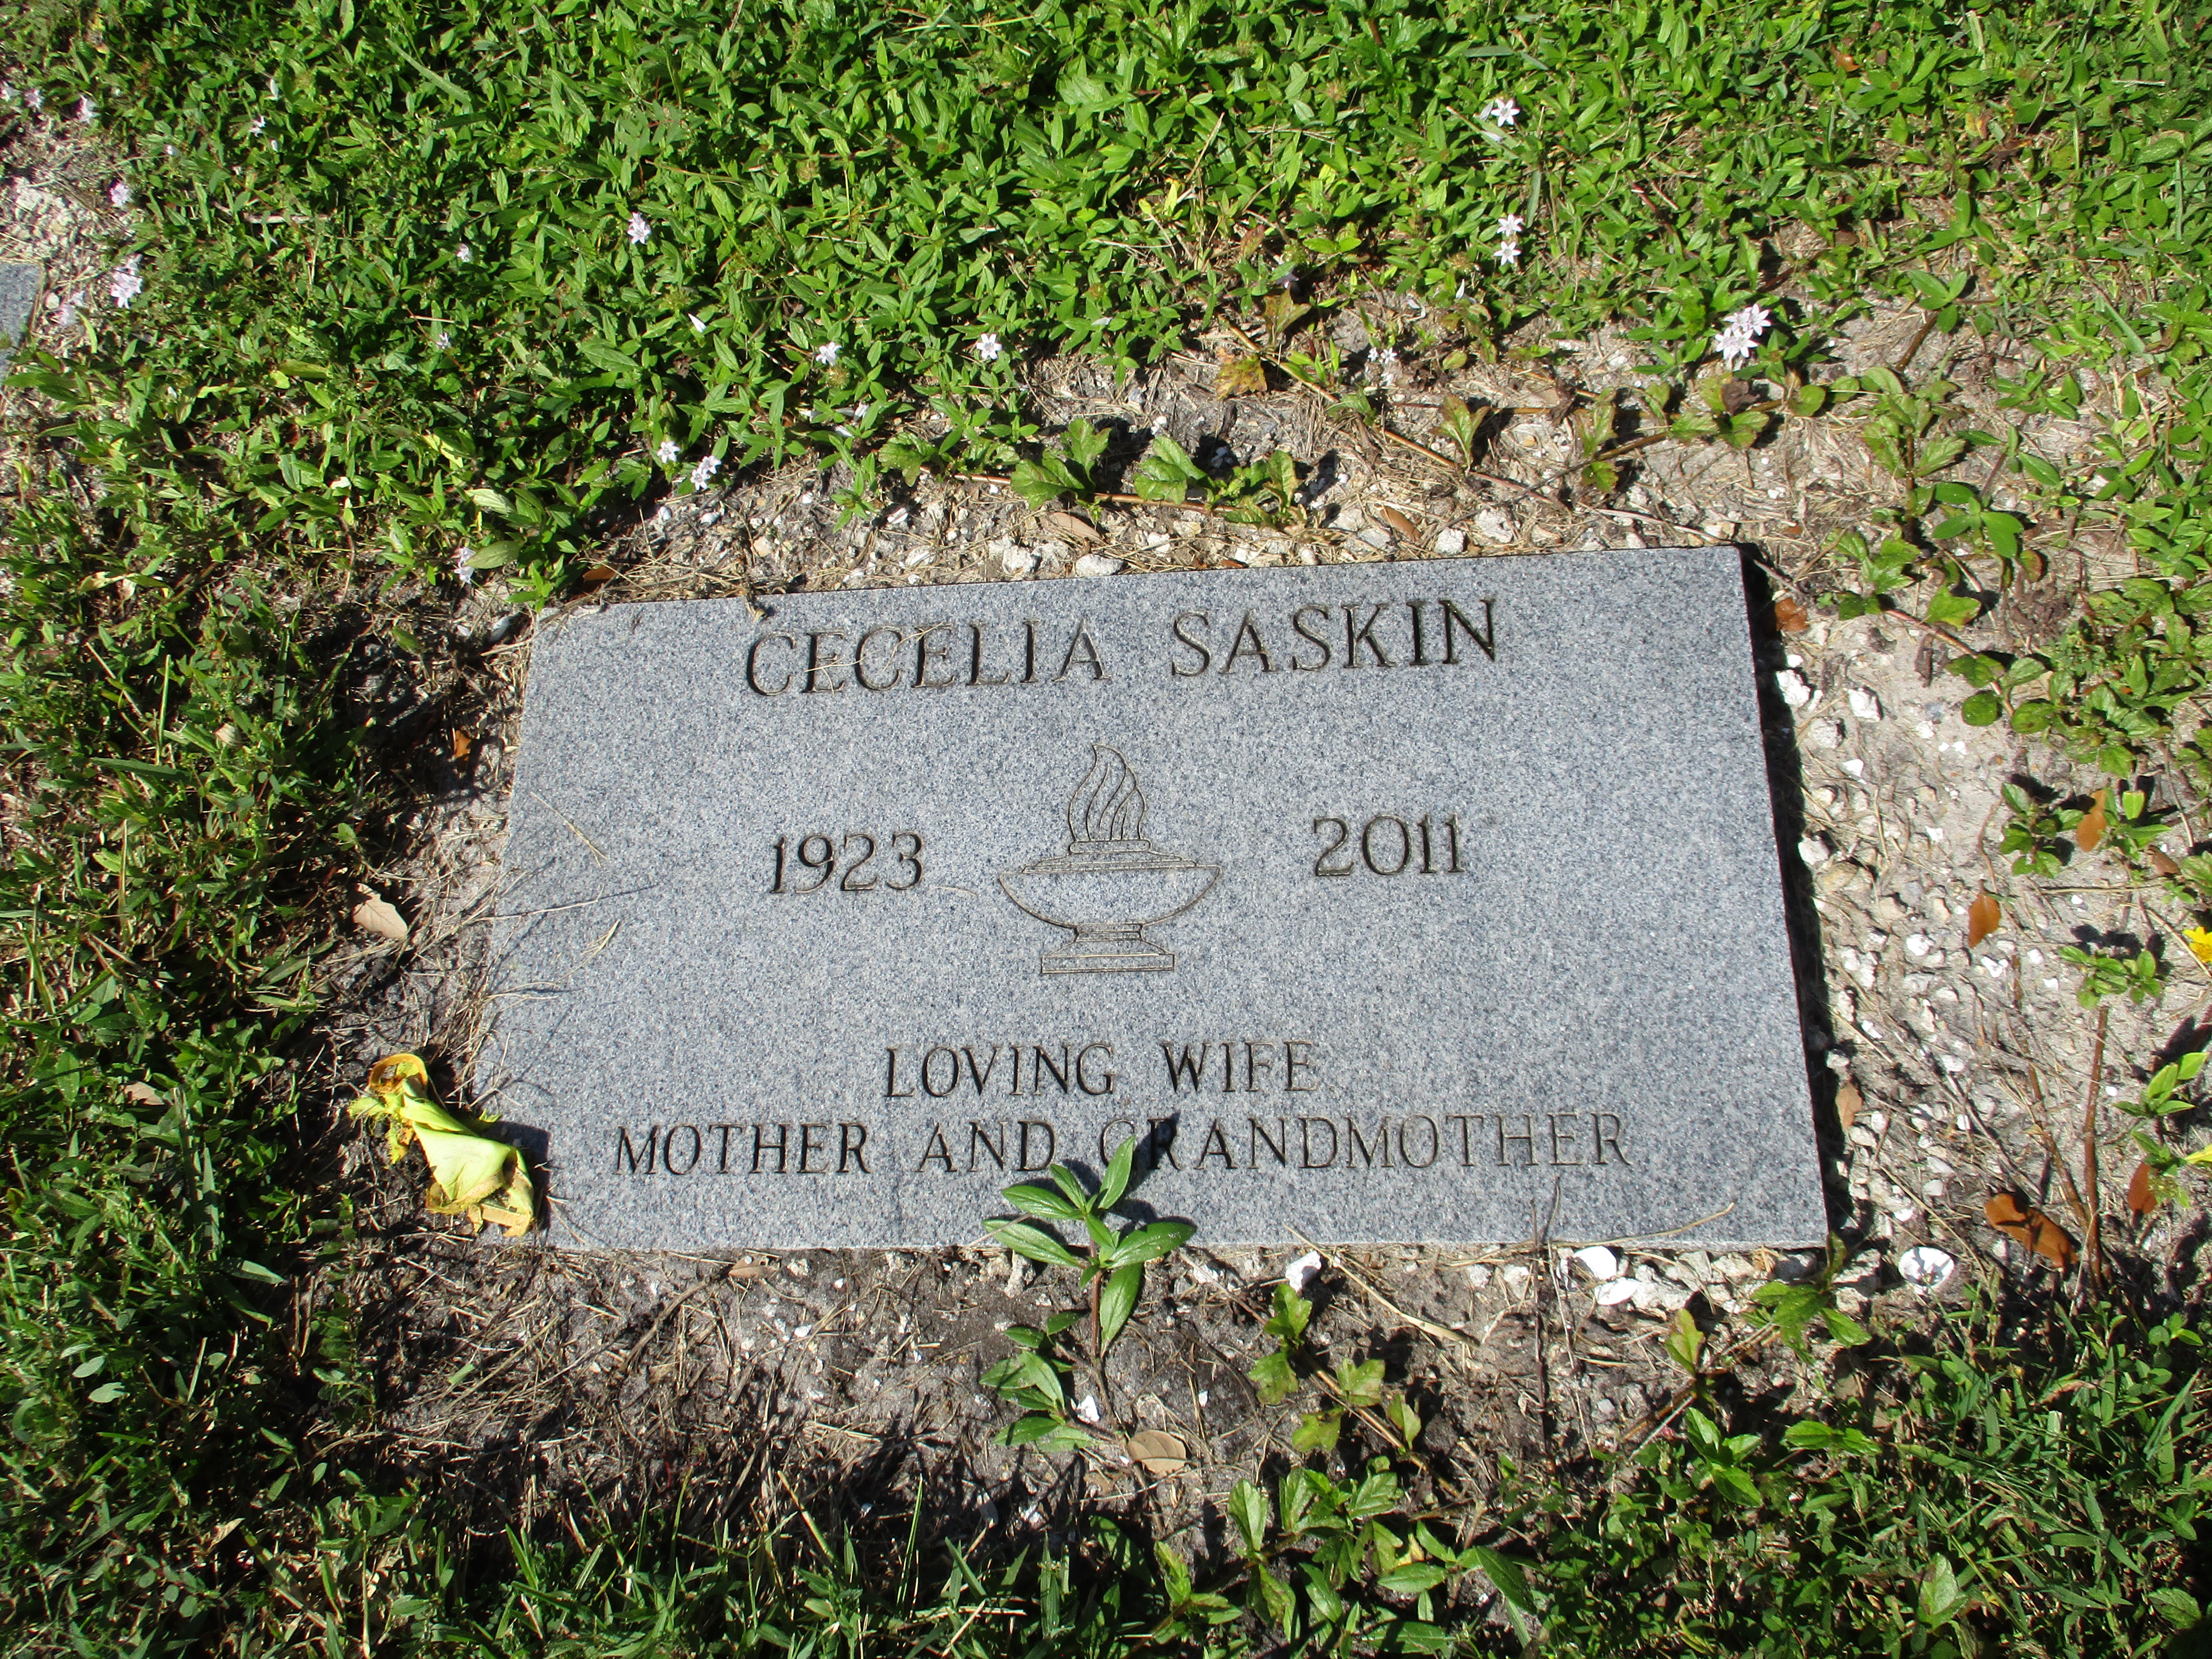 Cecelia Saskin